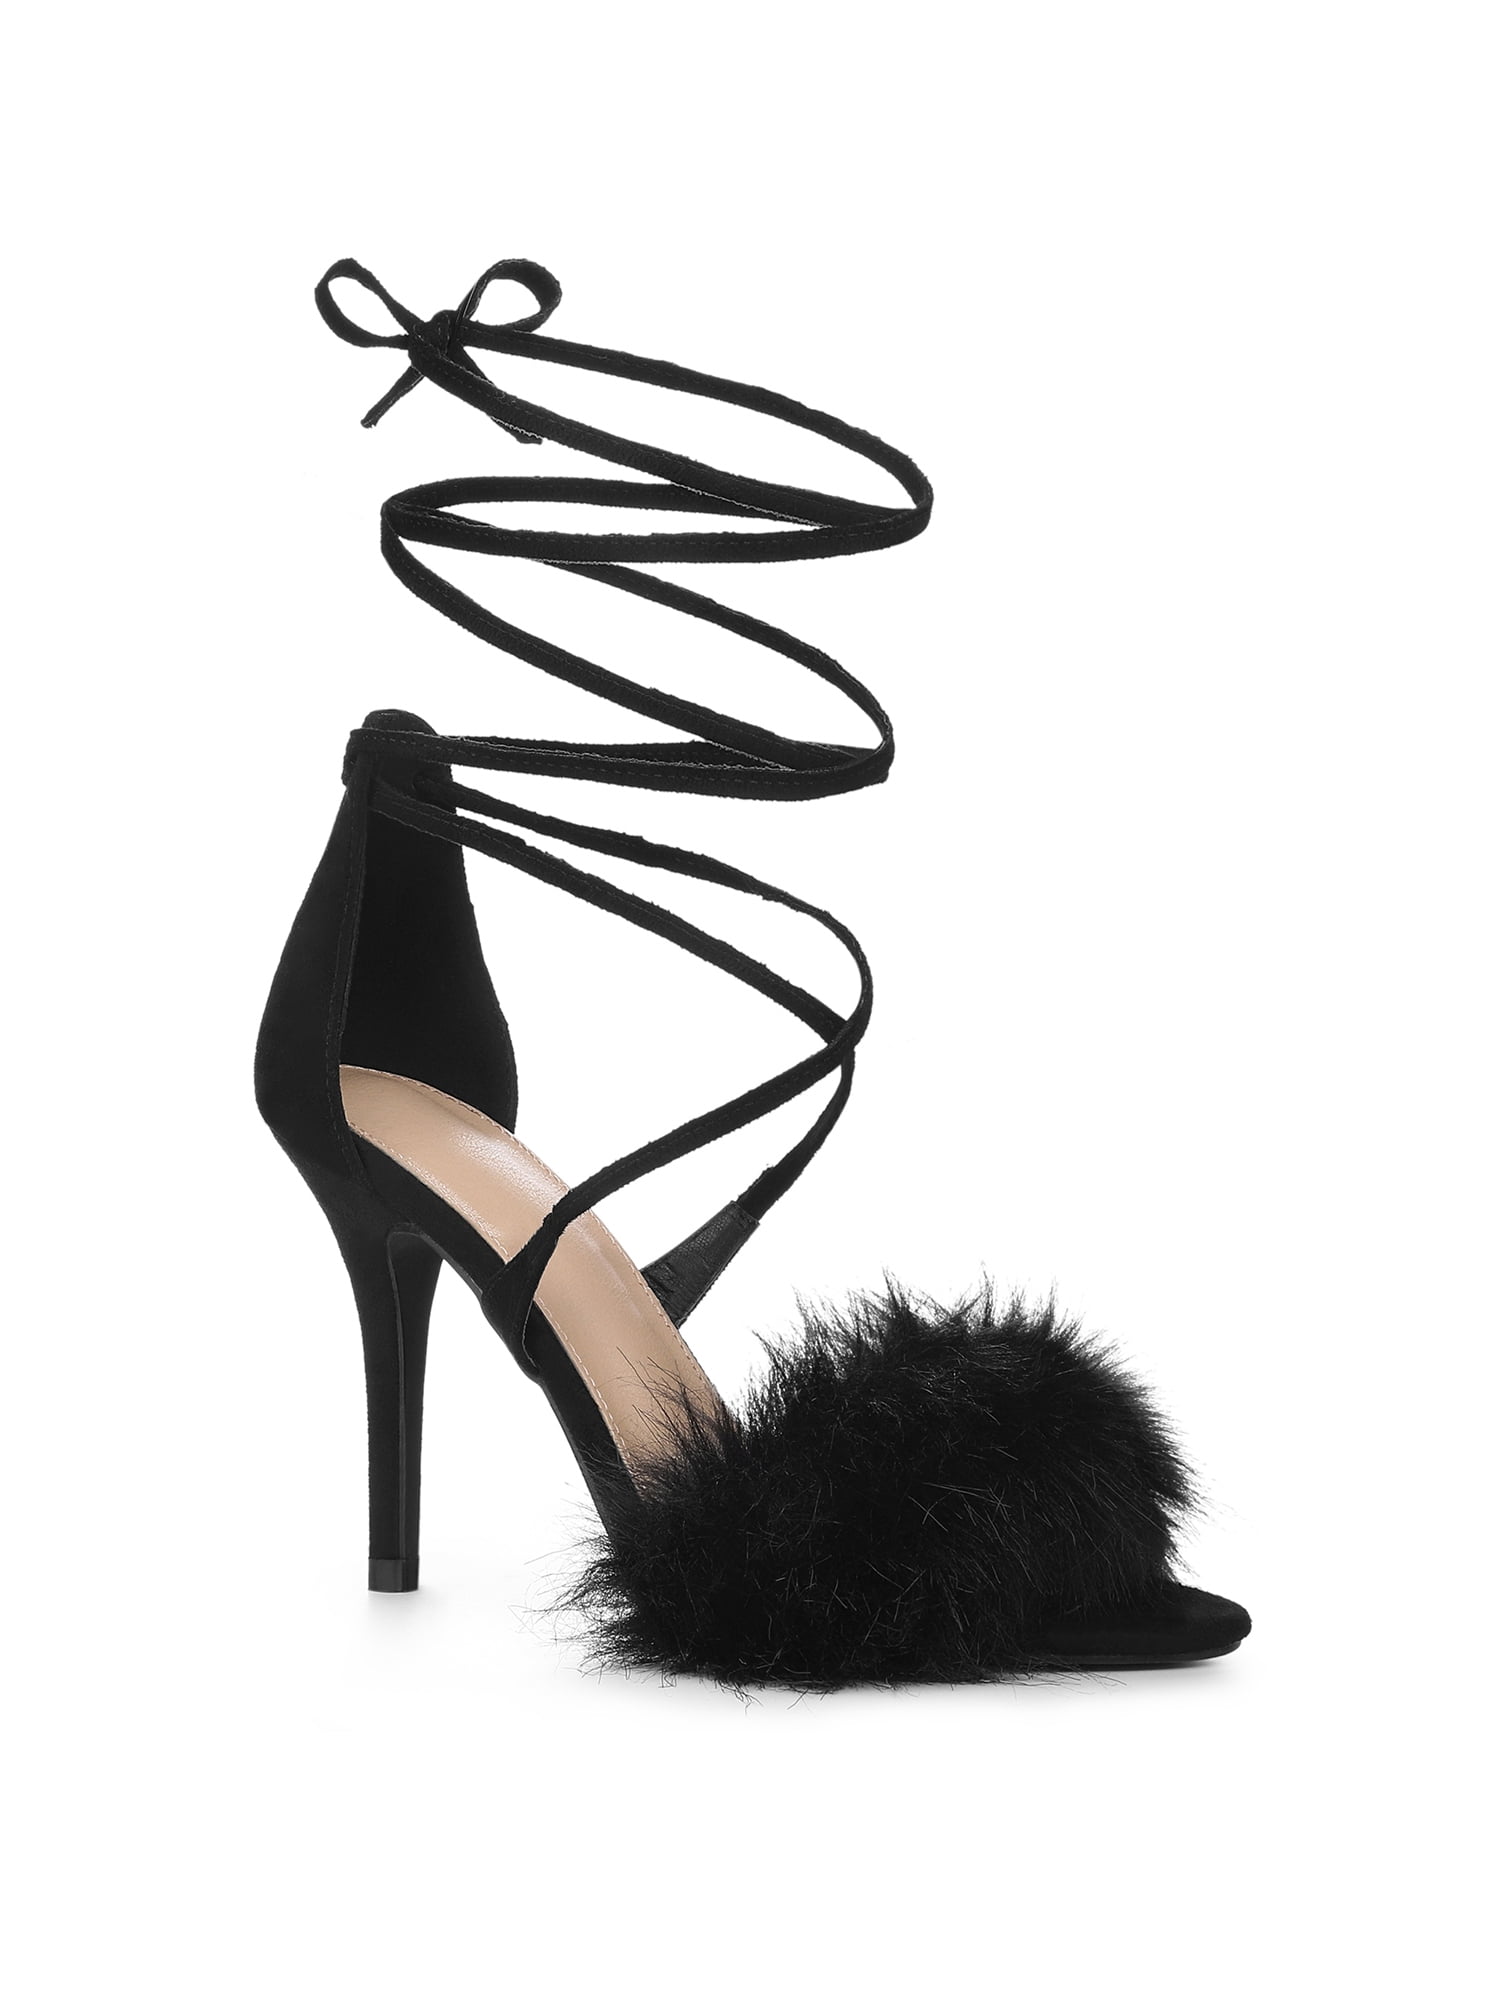 Lib 7 Inch Super Heels Peep Toe Ankle Lace Up Fluffy Fur Platform Sandals -  Black in Sexy Heels & Platforms - $65.99